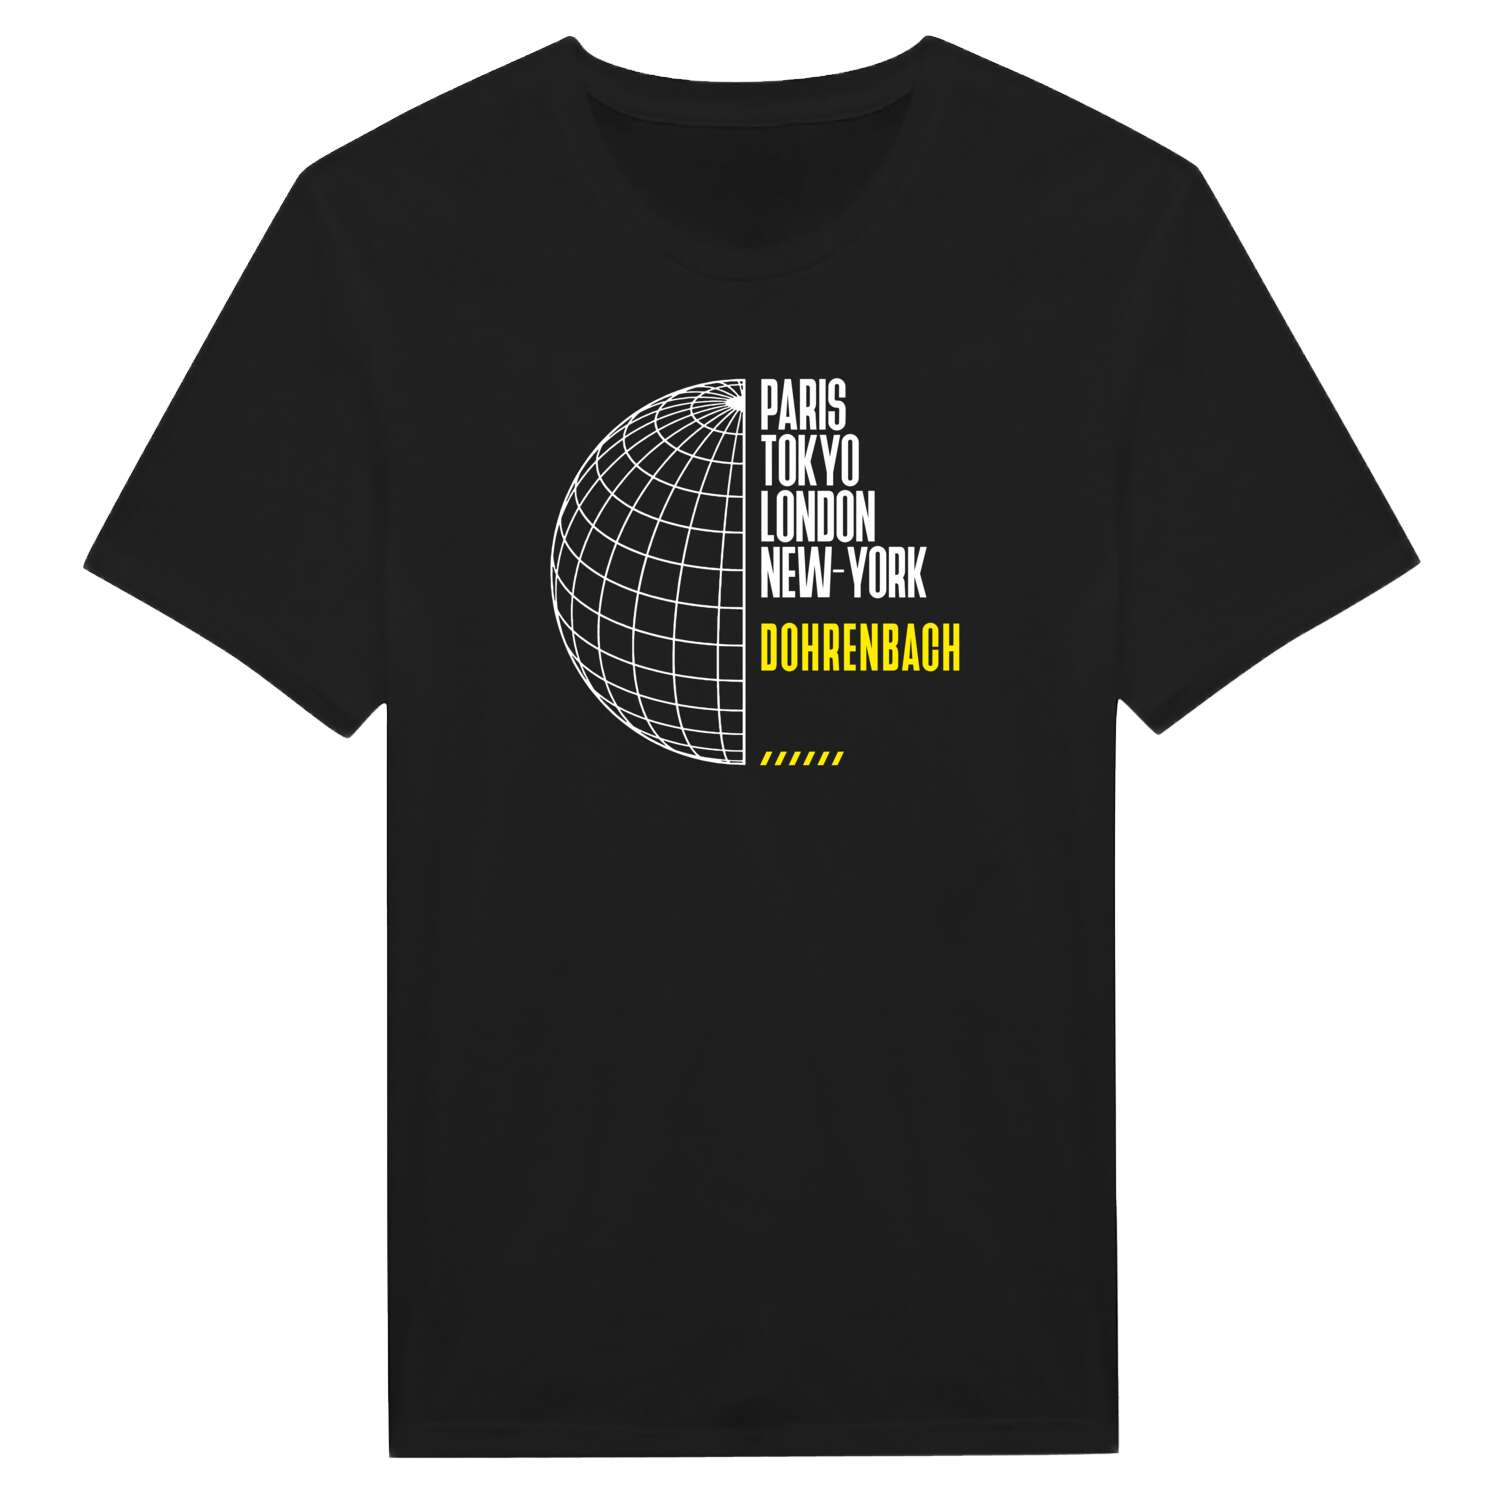 Dohrenbach T-Shirt »Paris Tokyo London«